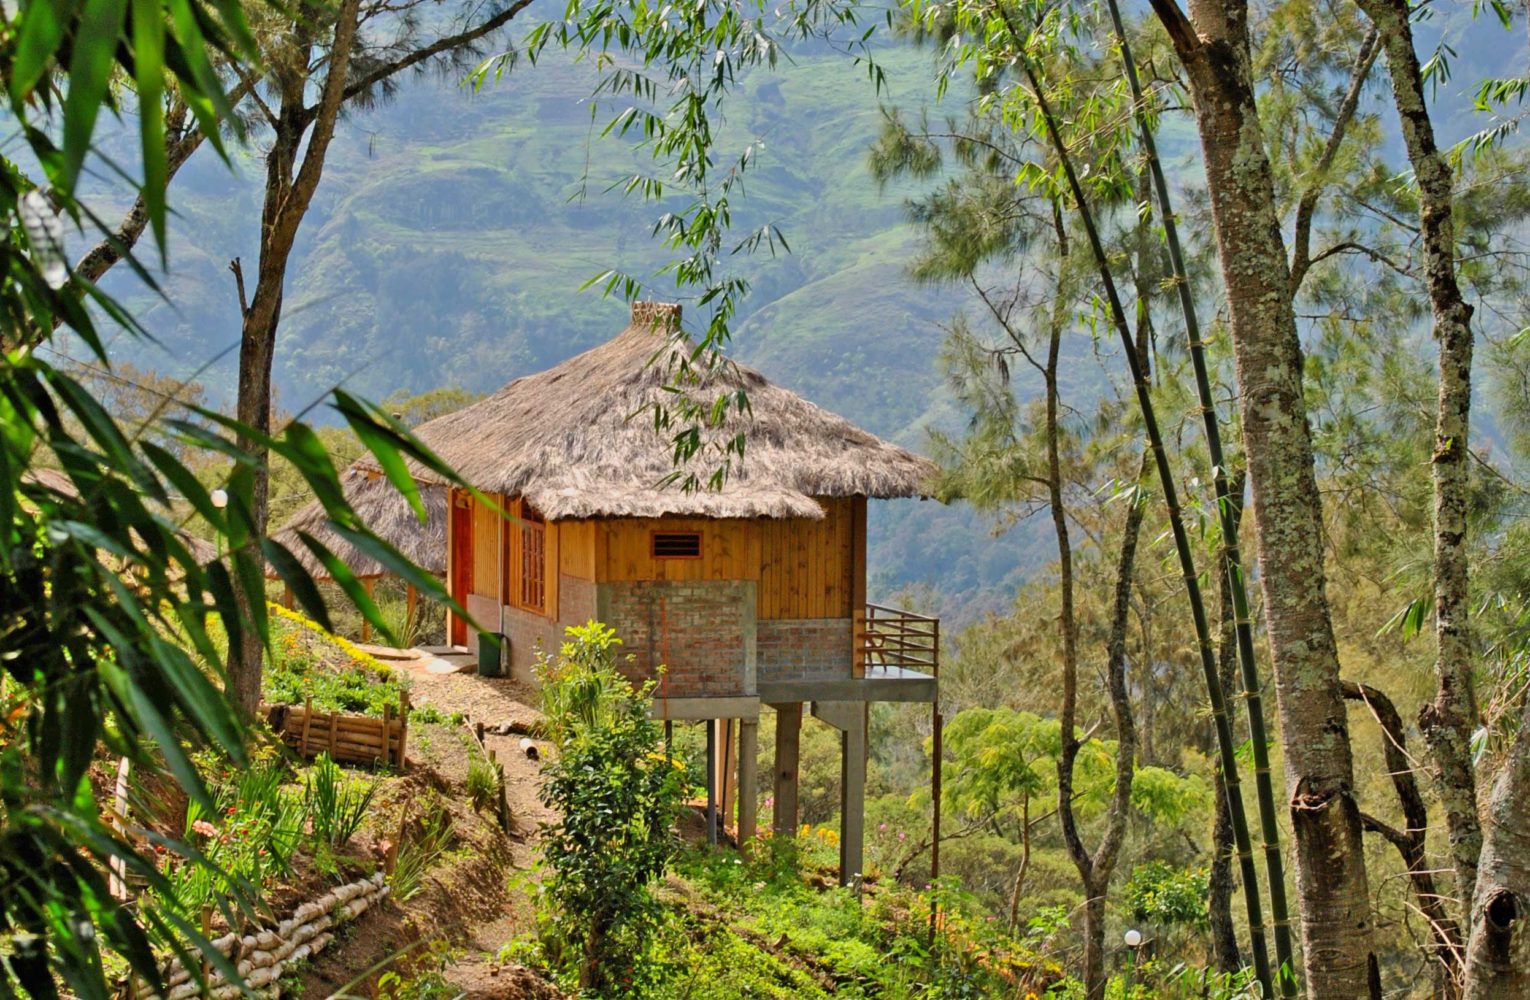 A hut on concrete stilts in the jungle of Timor-Leste